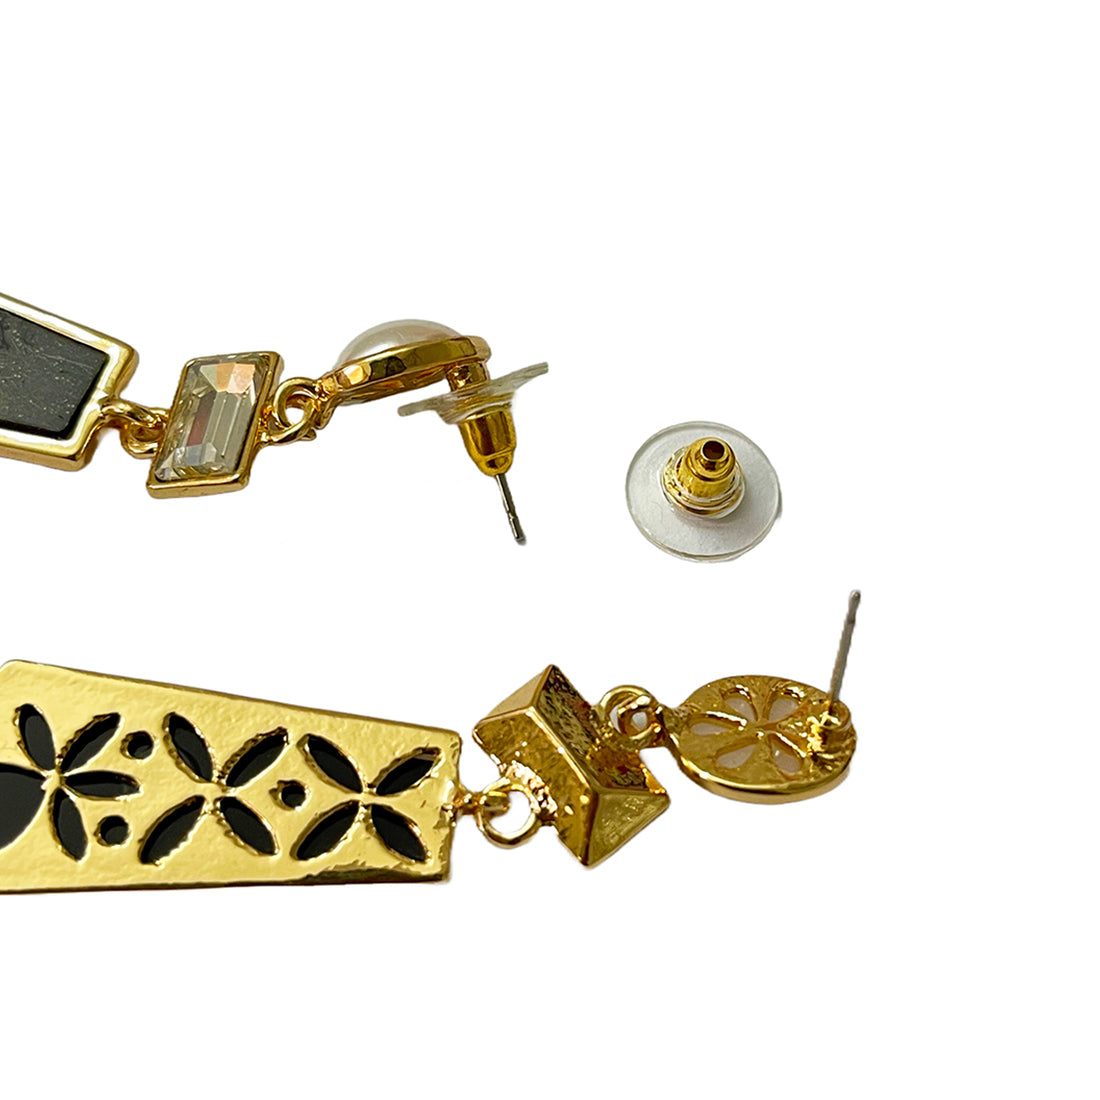 Pearl, Rhinestone & Black Acrylic Gold-Toned Triple Geometric Drop Earrings